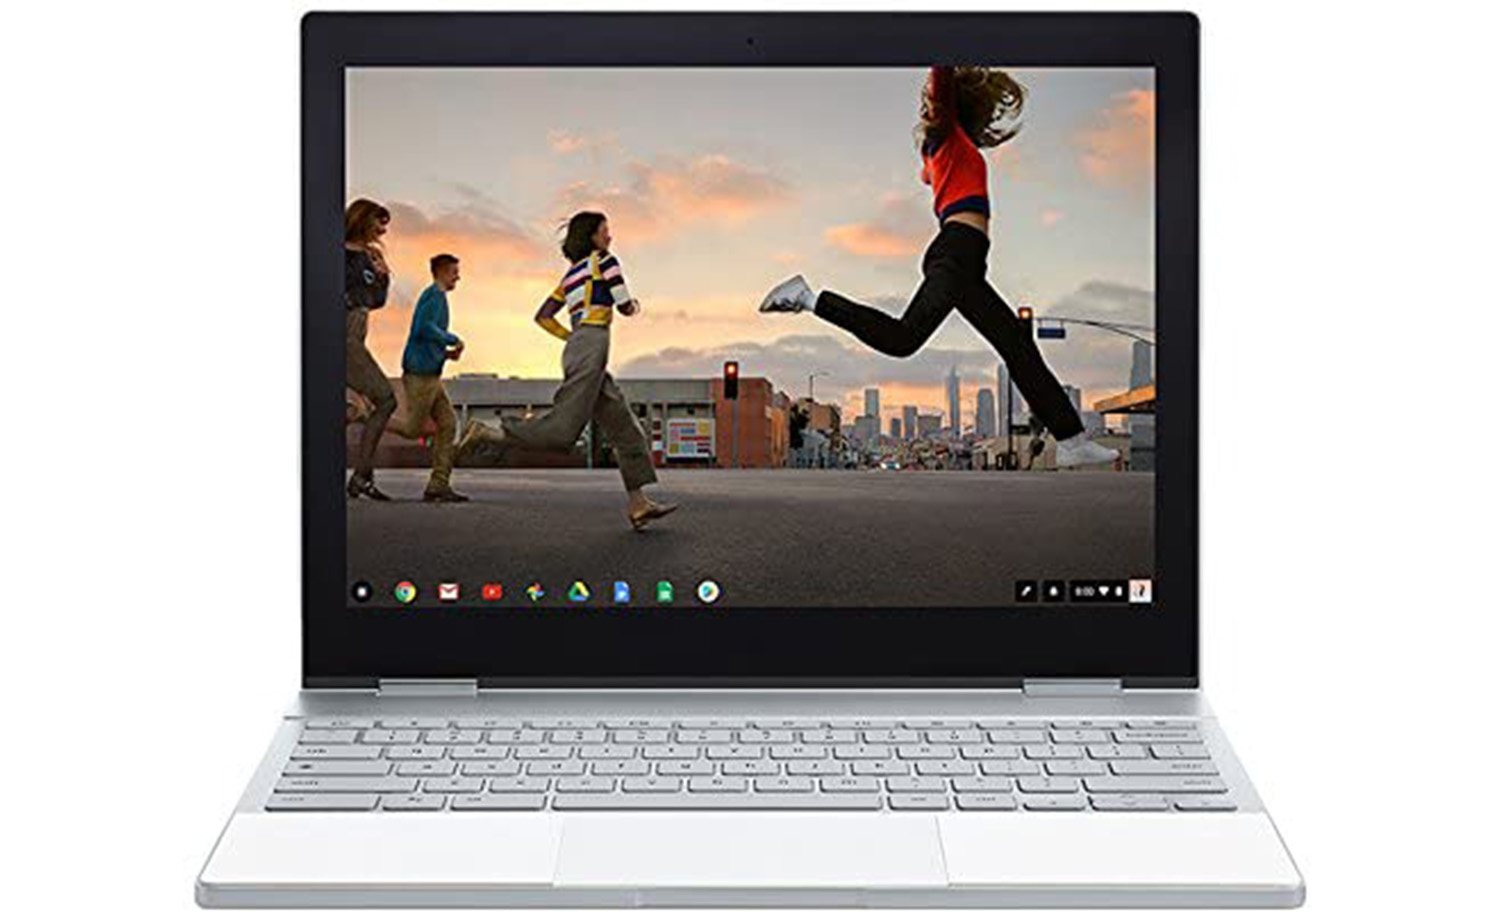 Google PixelBook C0A Intel Core i5 7th Gen 8GB RAM 128GB SSD Touch ChromeOS